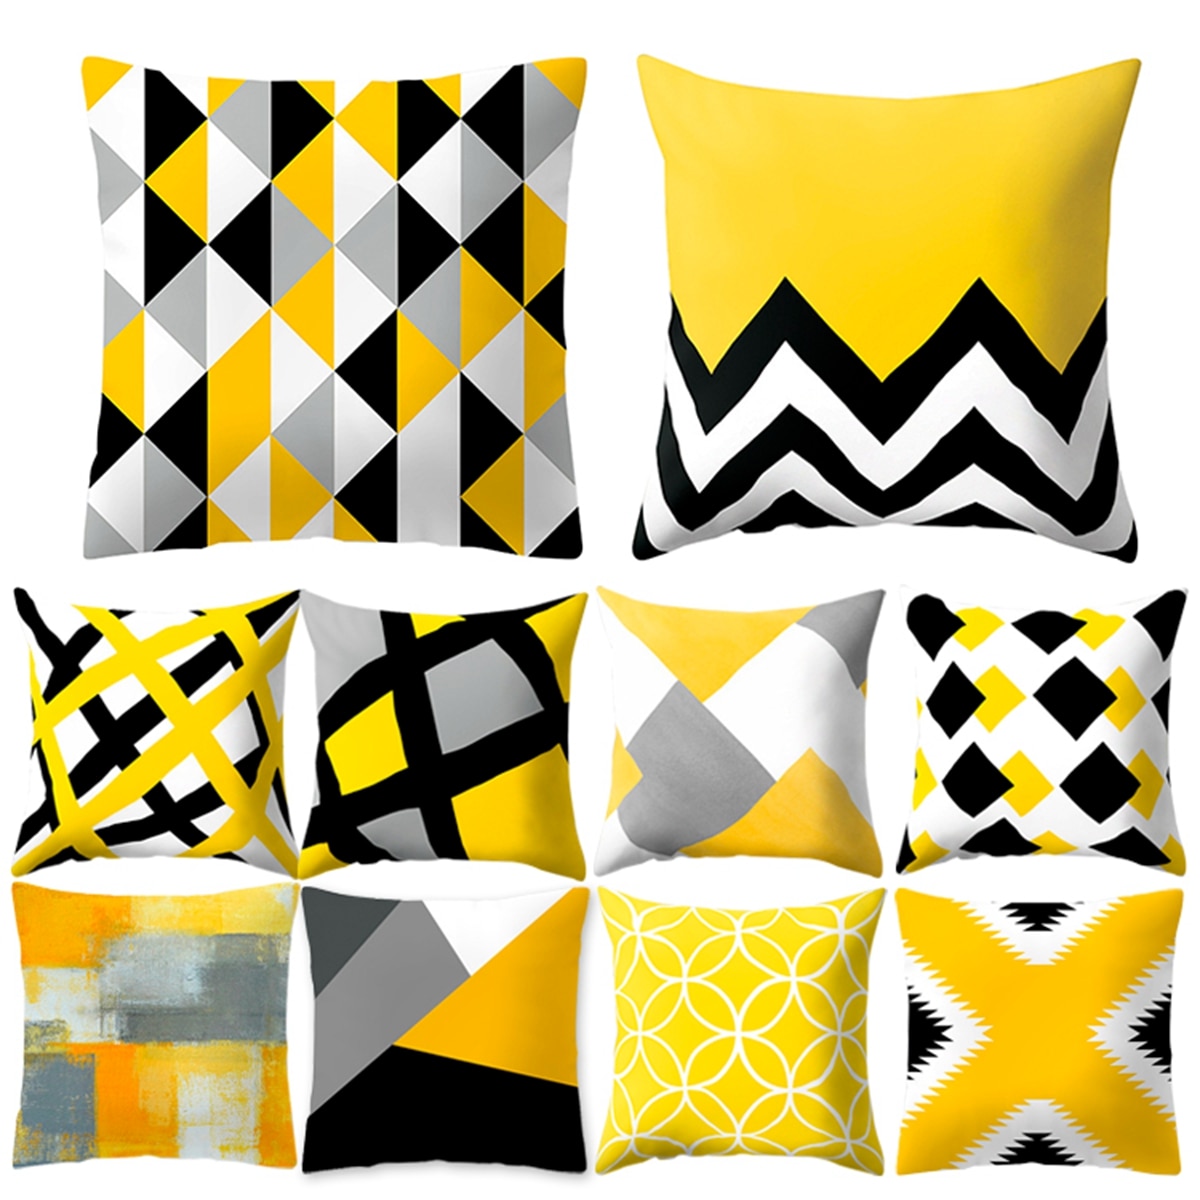 Geometric Cushions Carolina